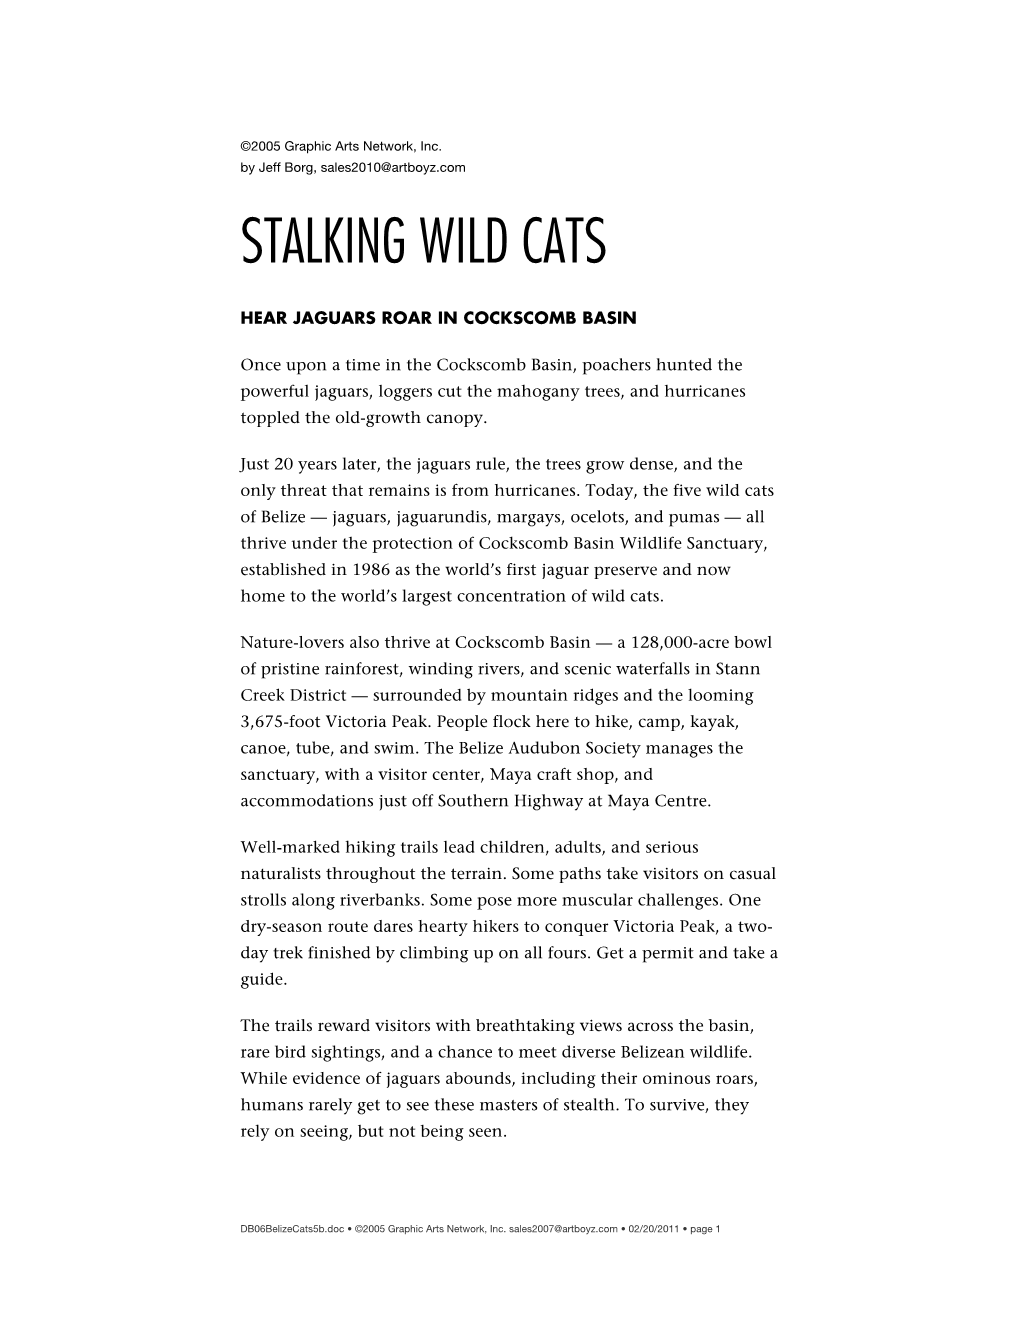 Stalking Wild Cats